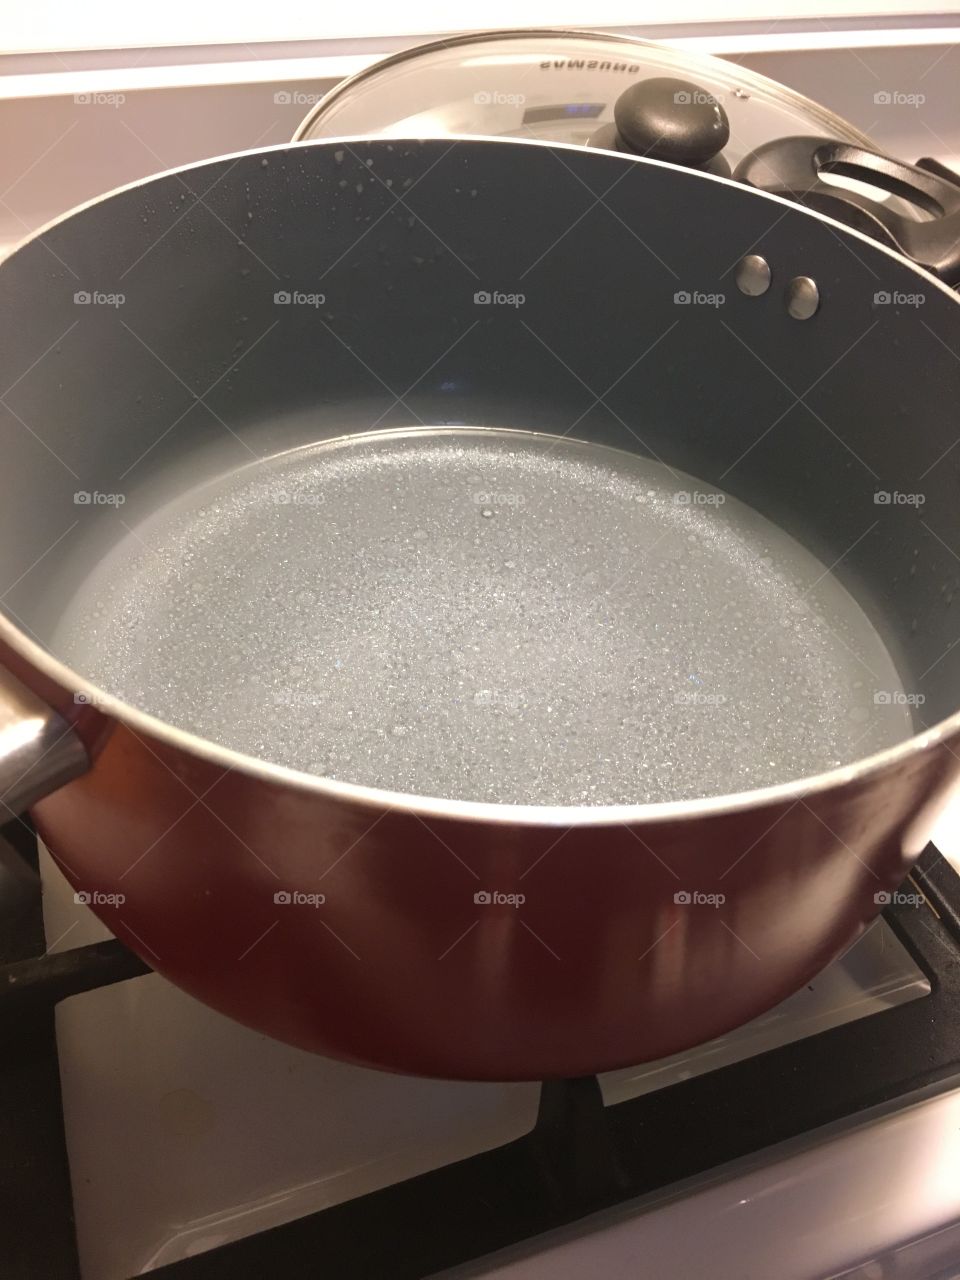 Pot of water